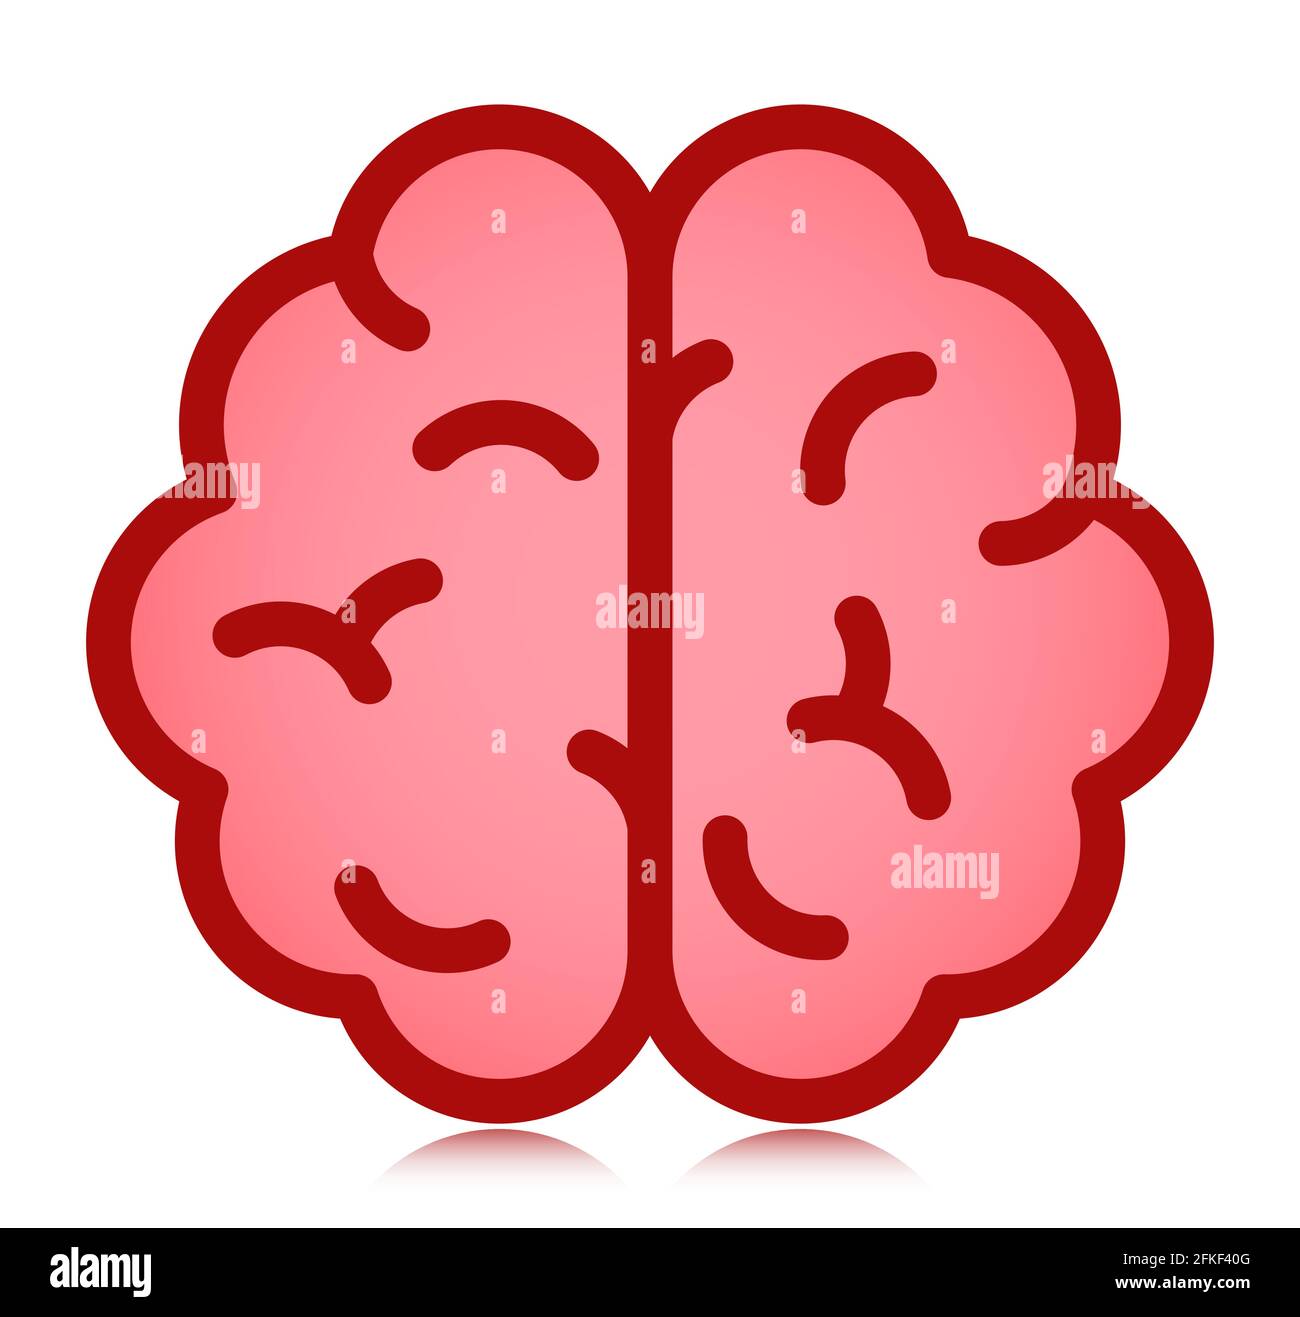 human brain flat icon vector image symbol Stock Vector